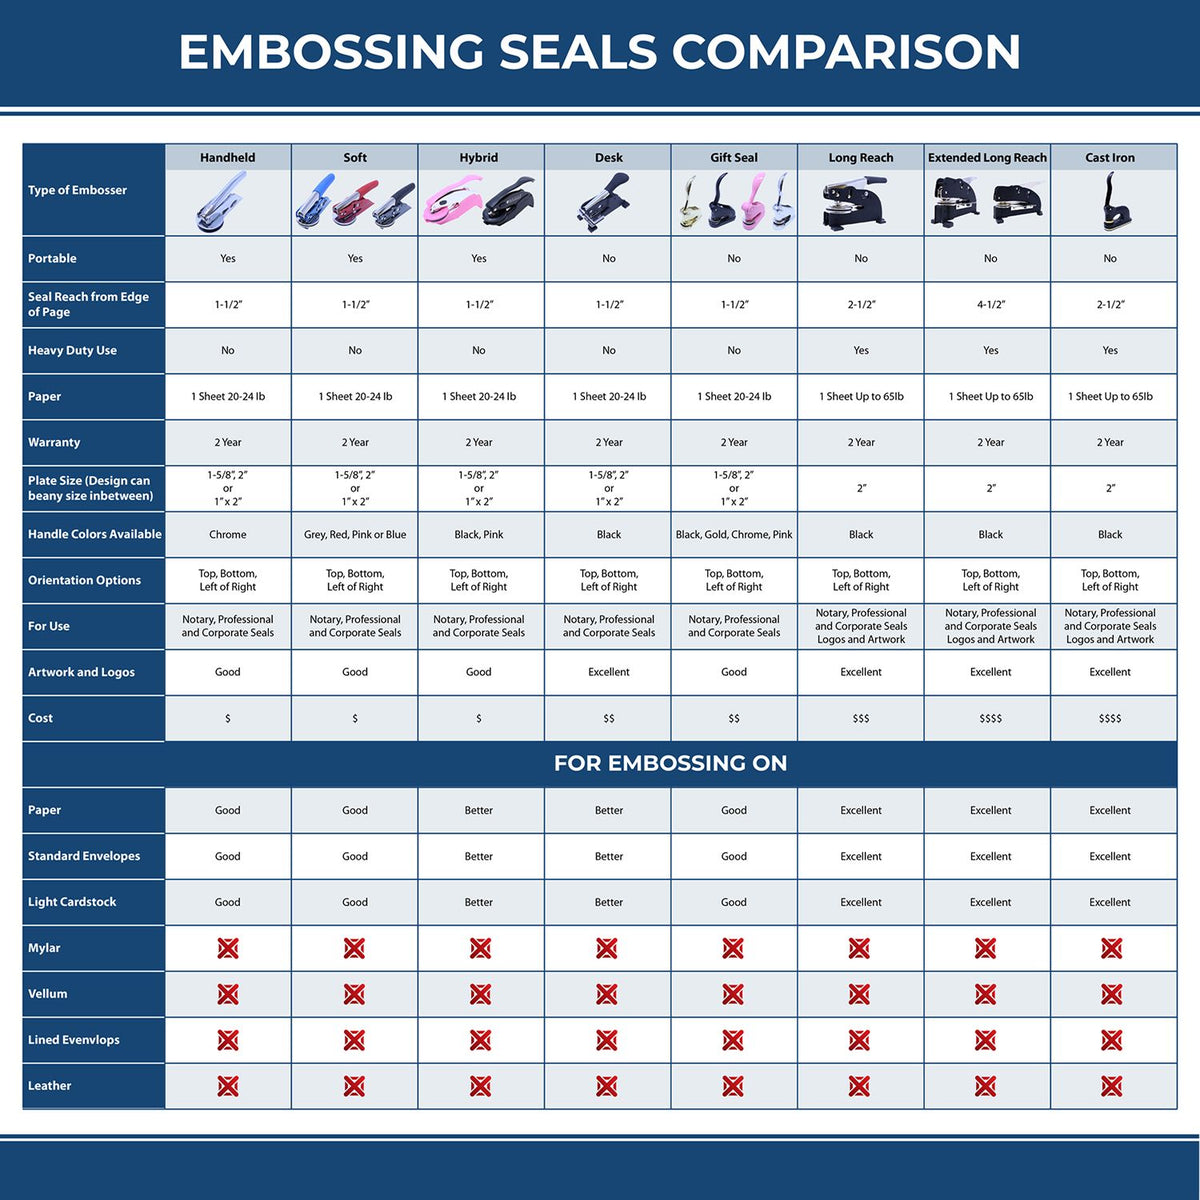 A comparison chart for the different types of mount models available for the Nebraska Desk Surveyor Seal Embosser.